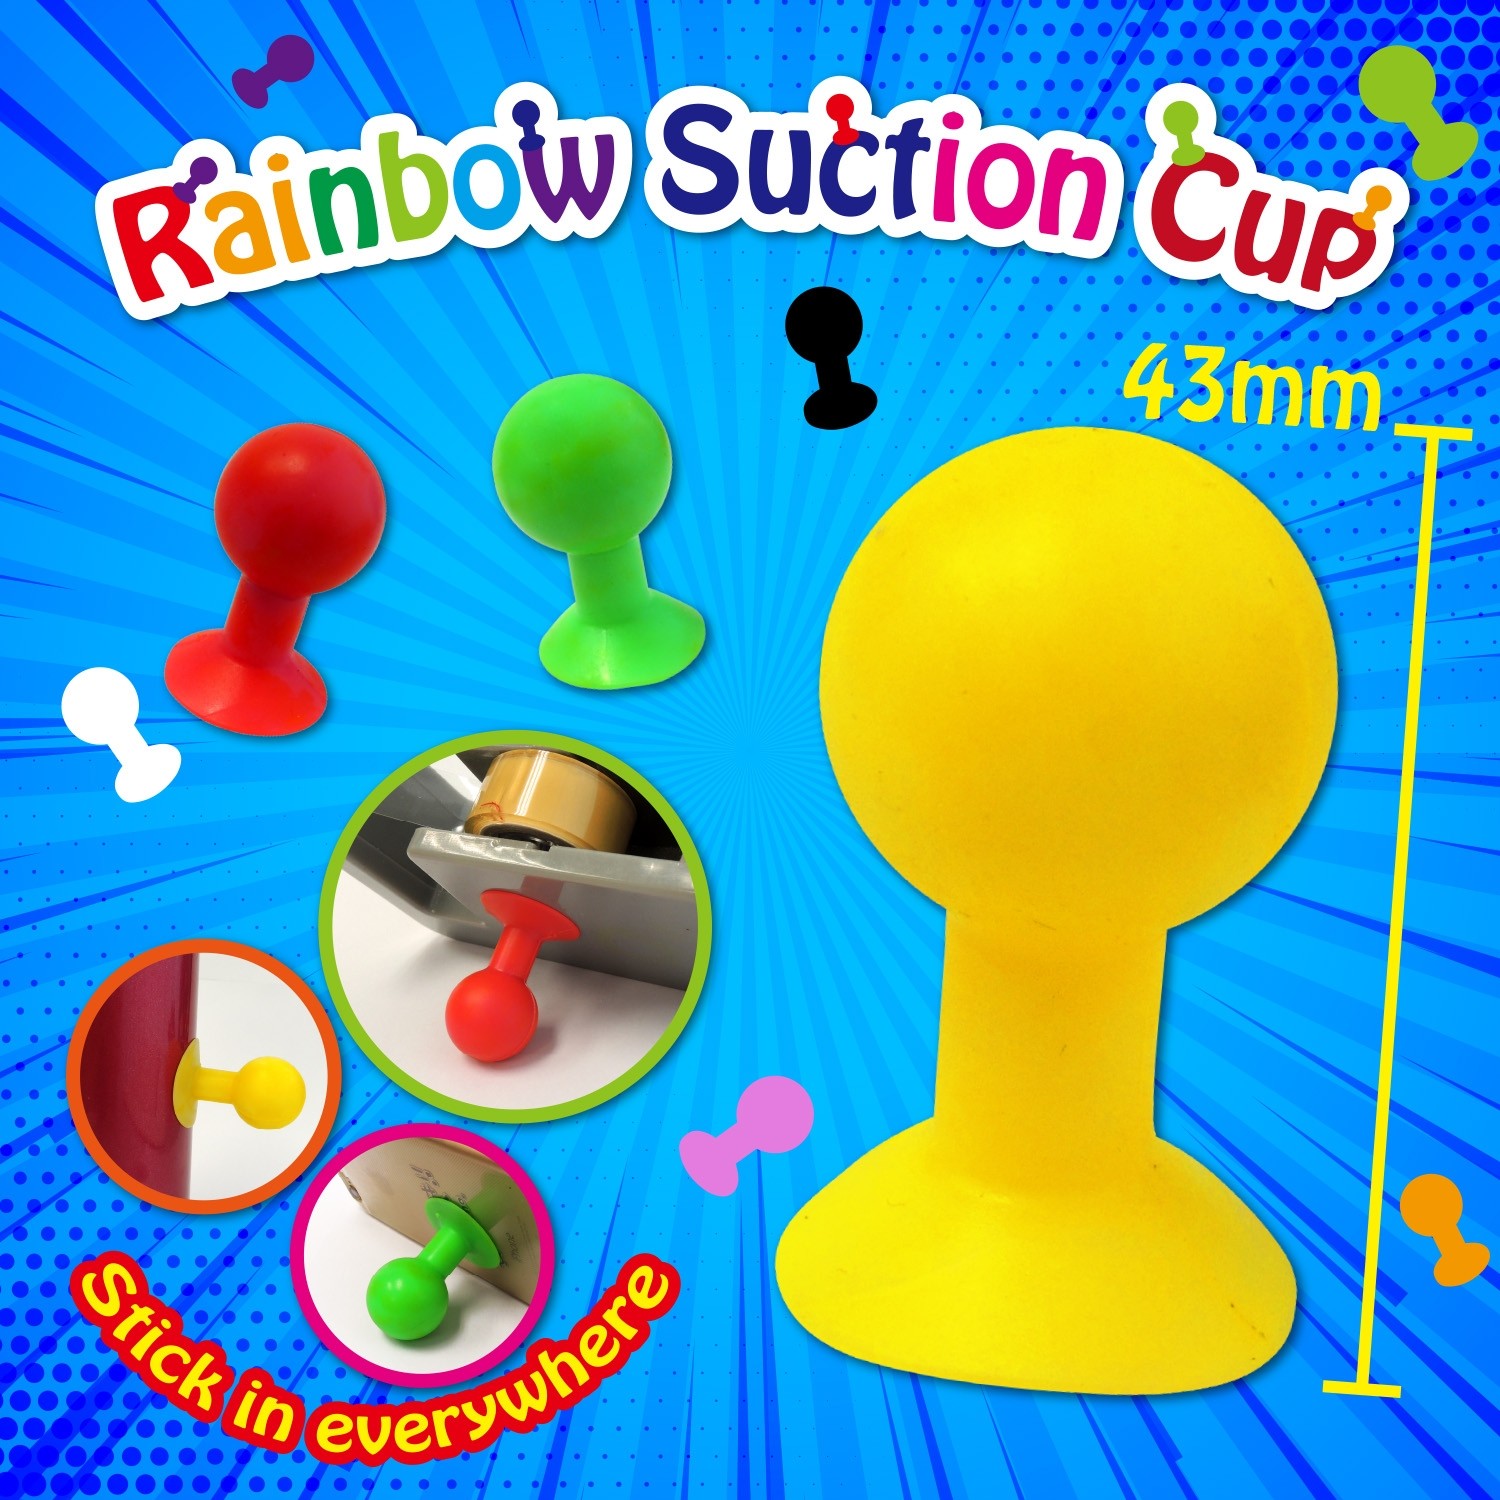 Rainbow Suction Cup